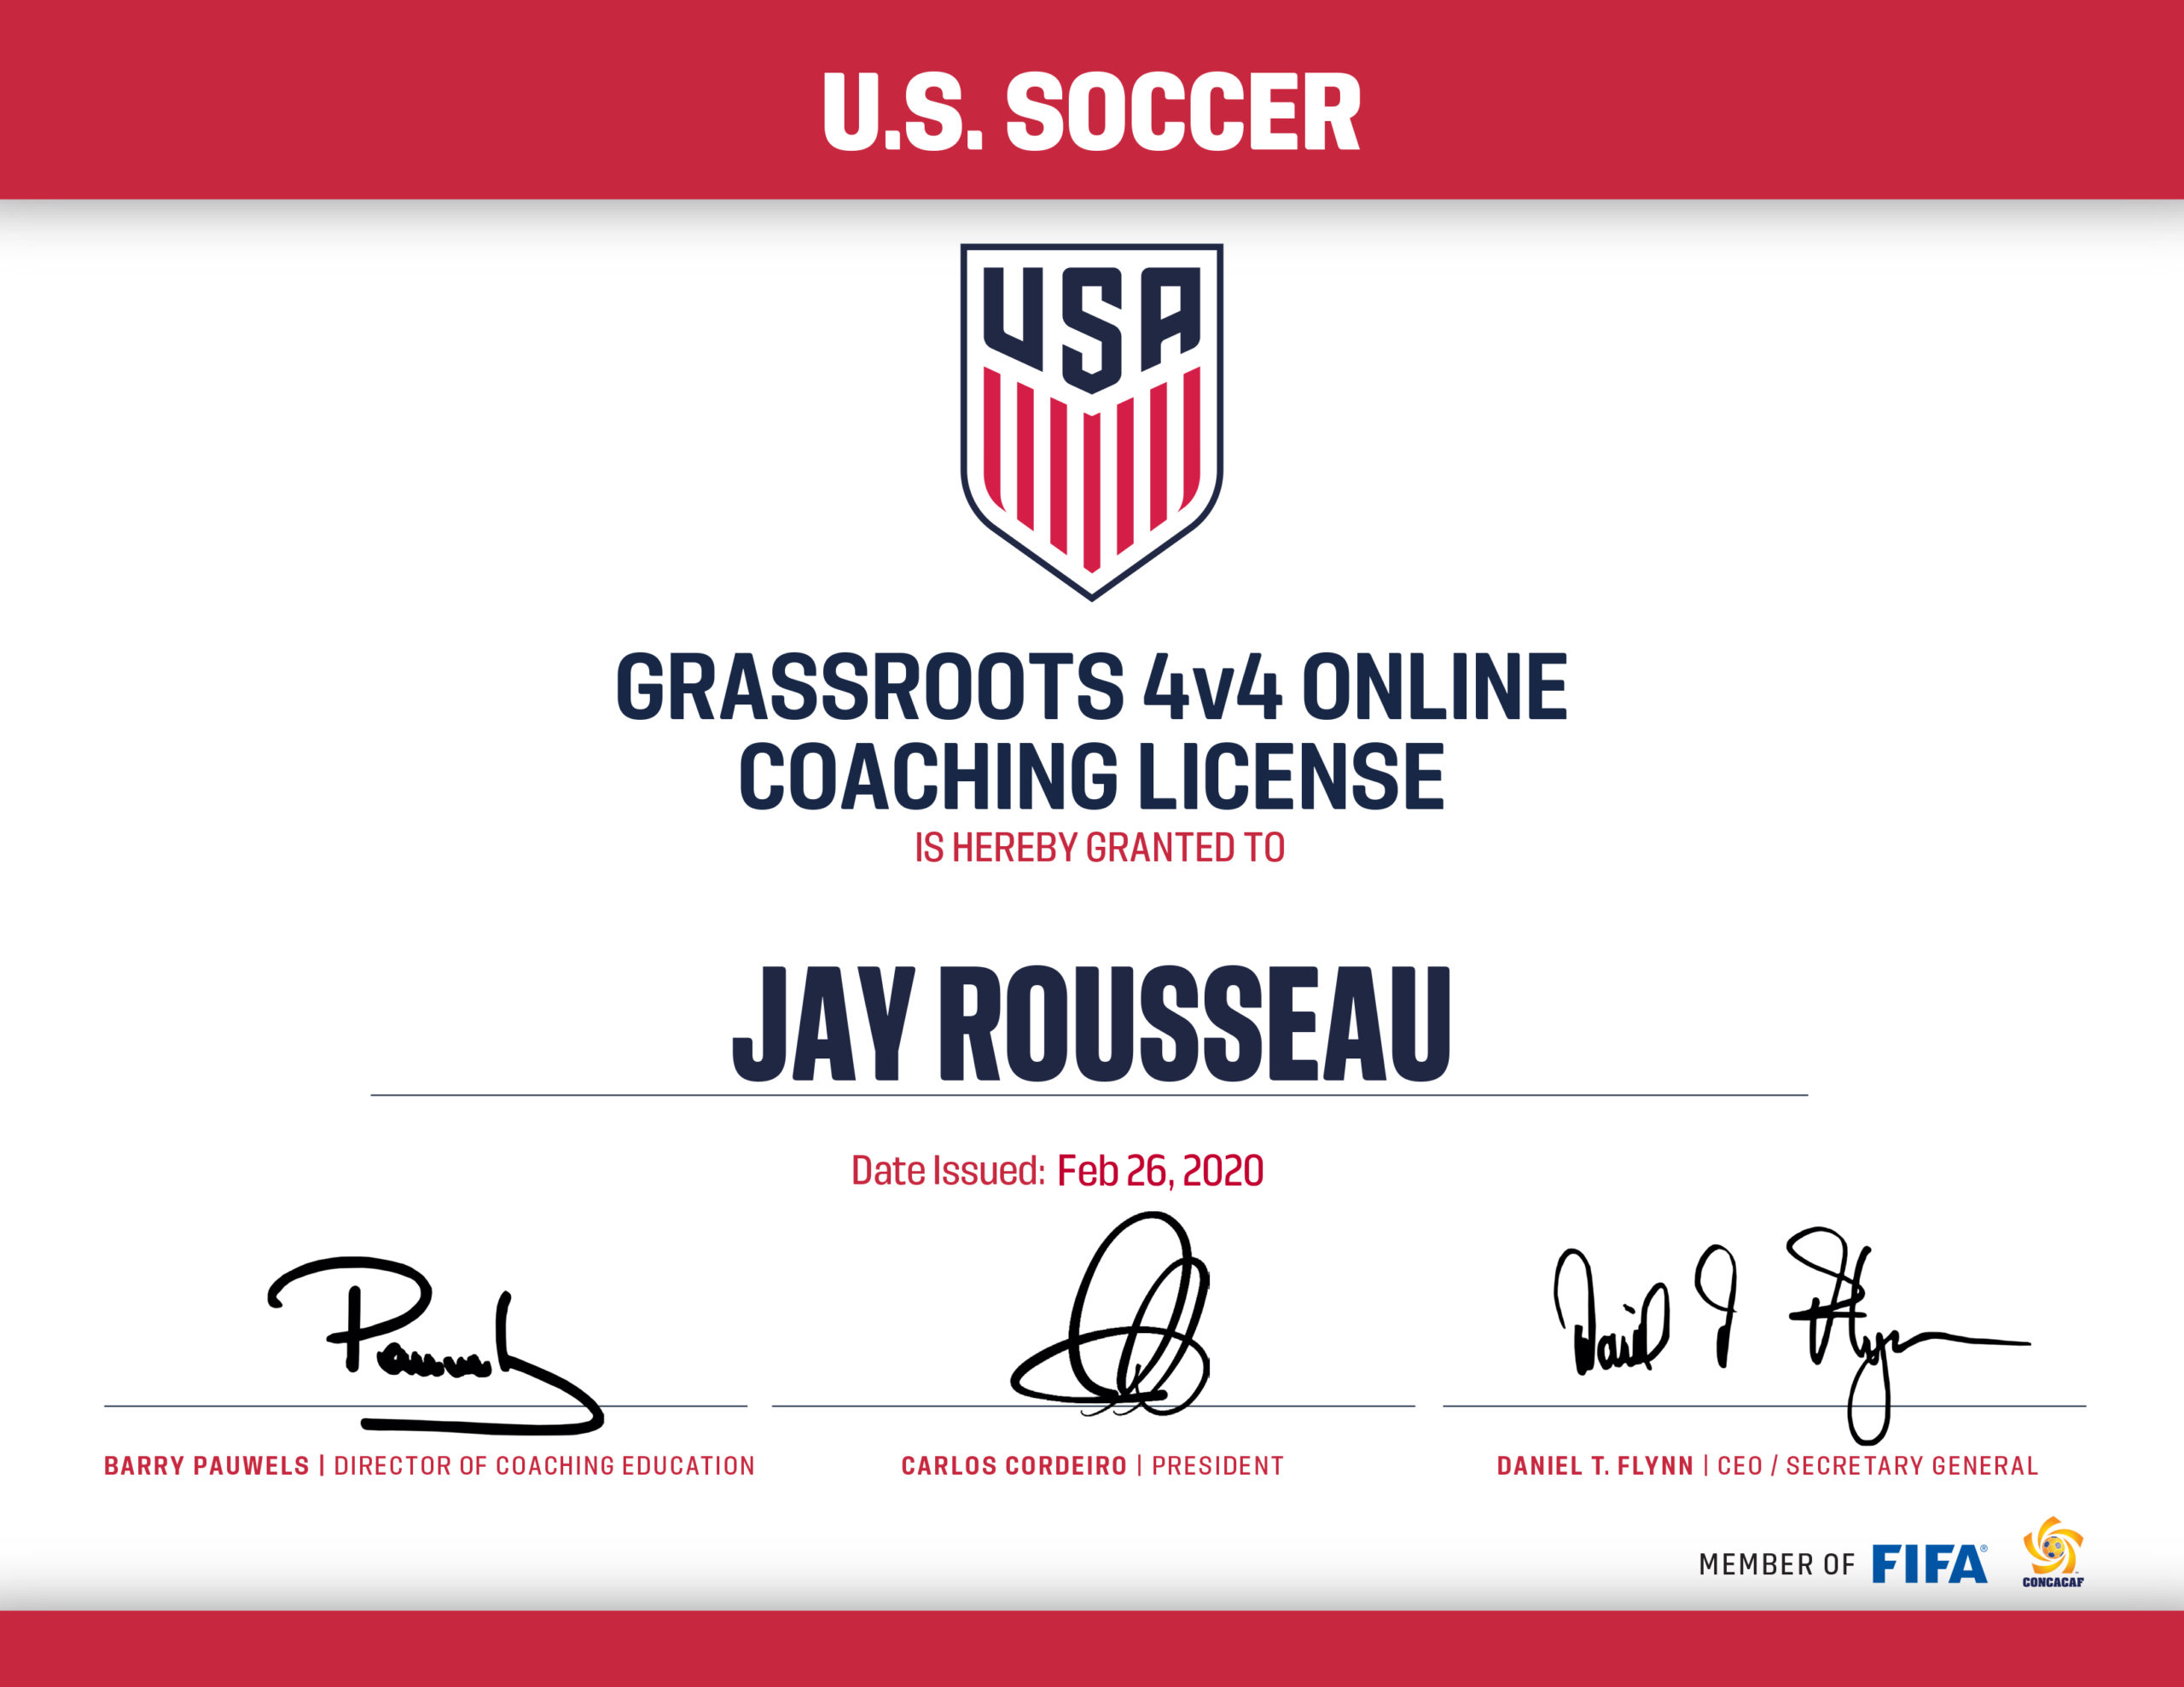 Grassroots 4v4 Coaching License